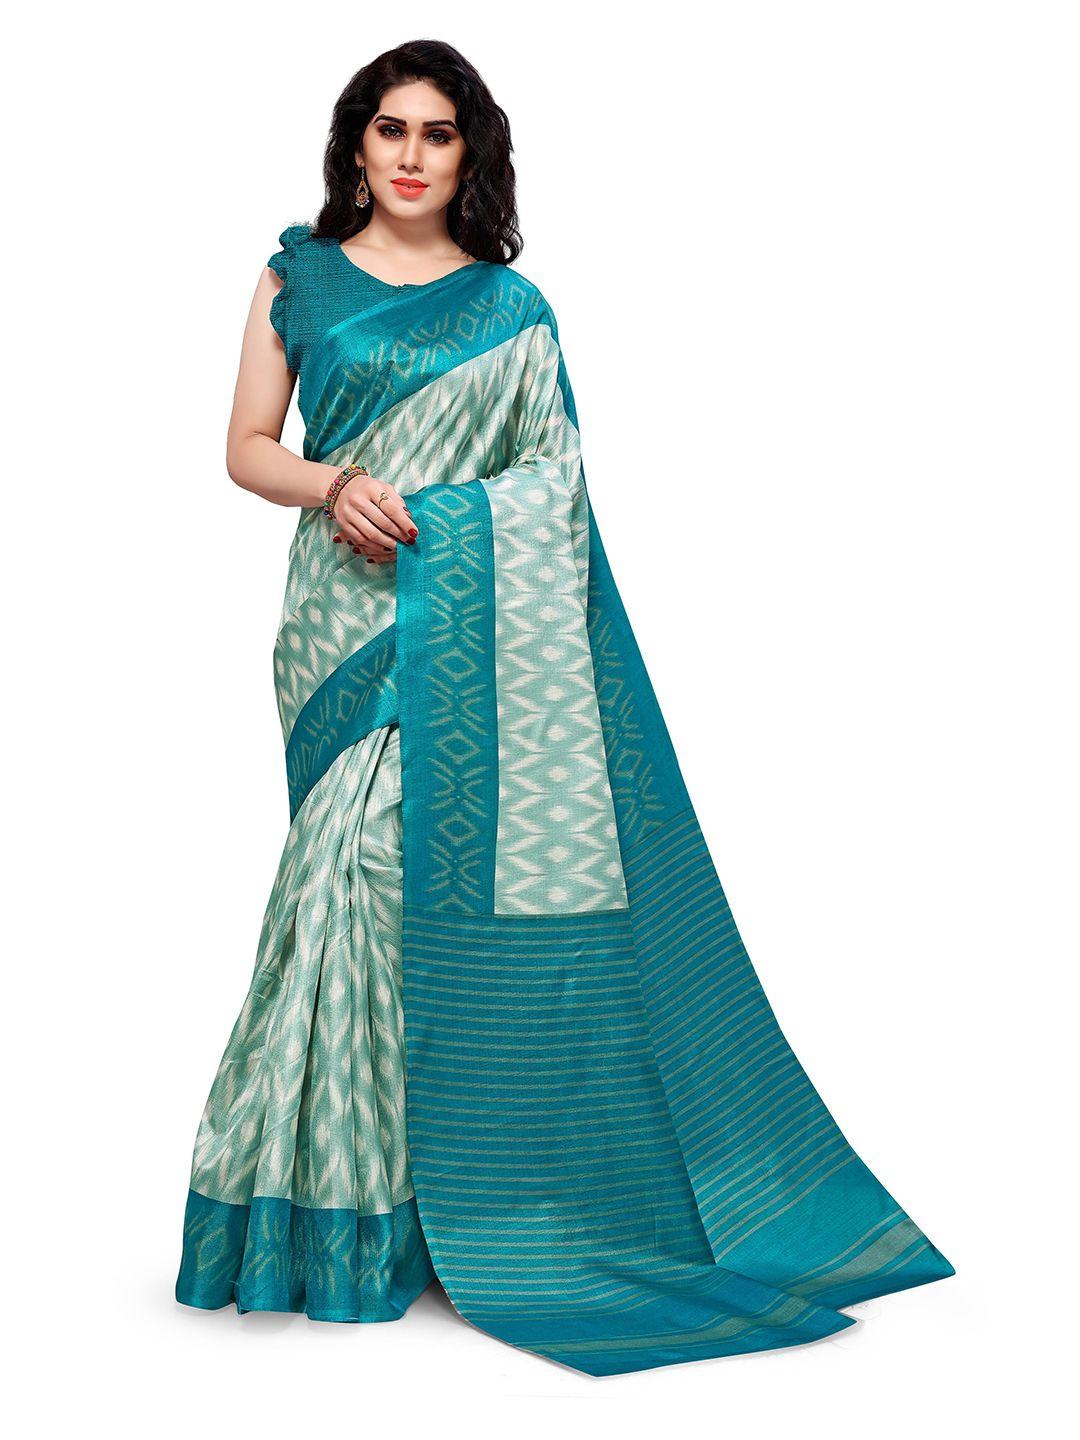 kalini off white & teal blue printed art silk saree